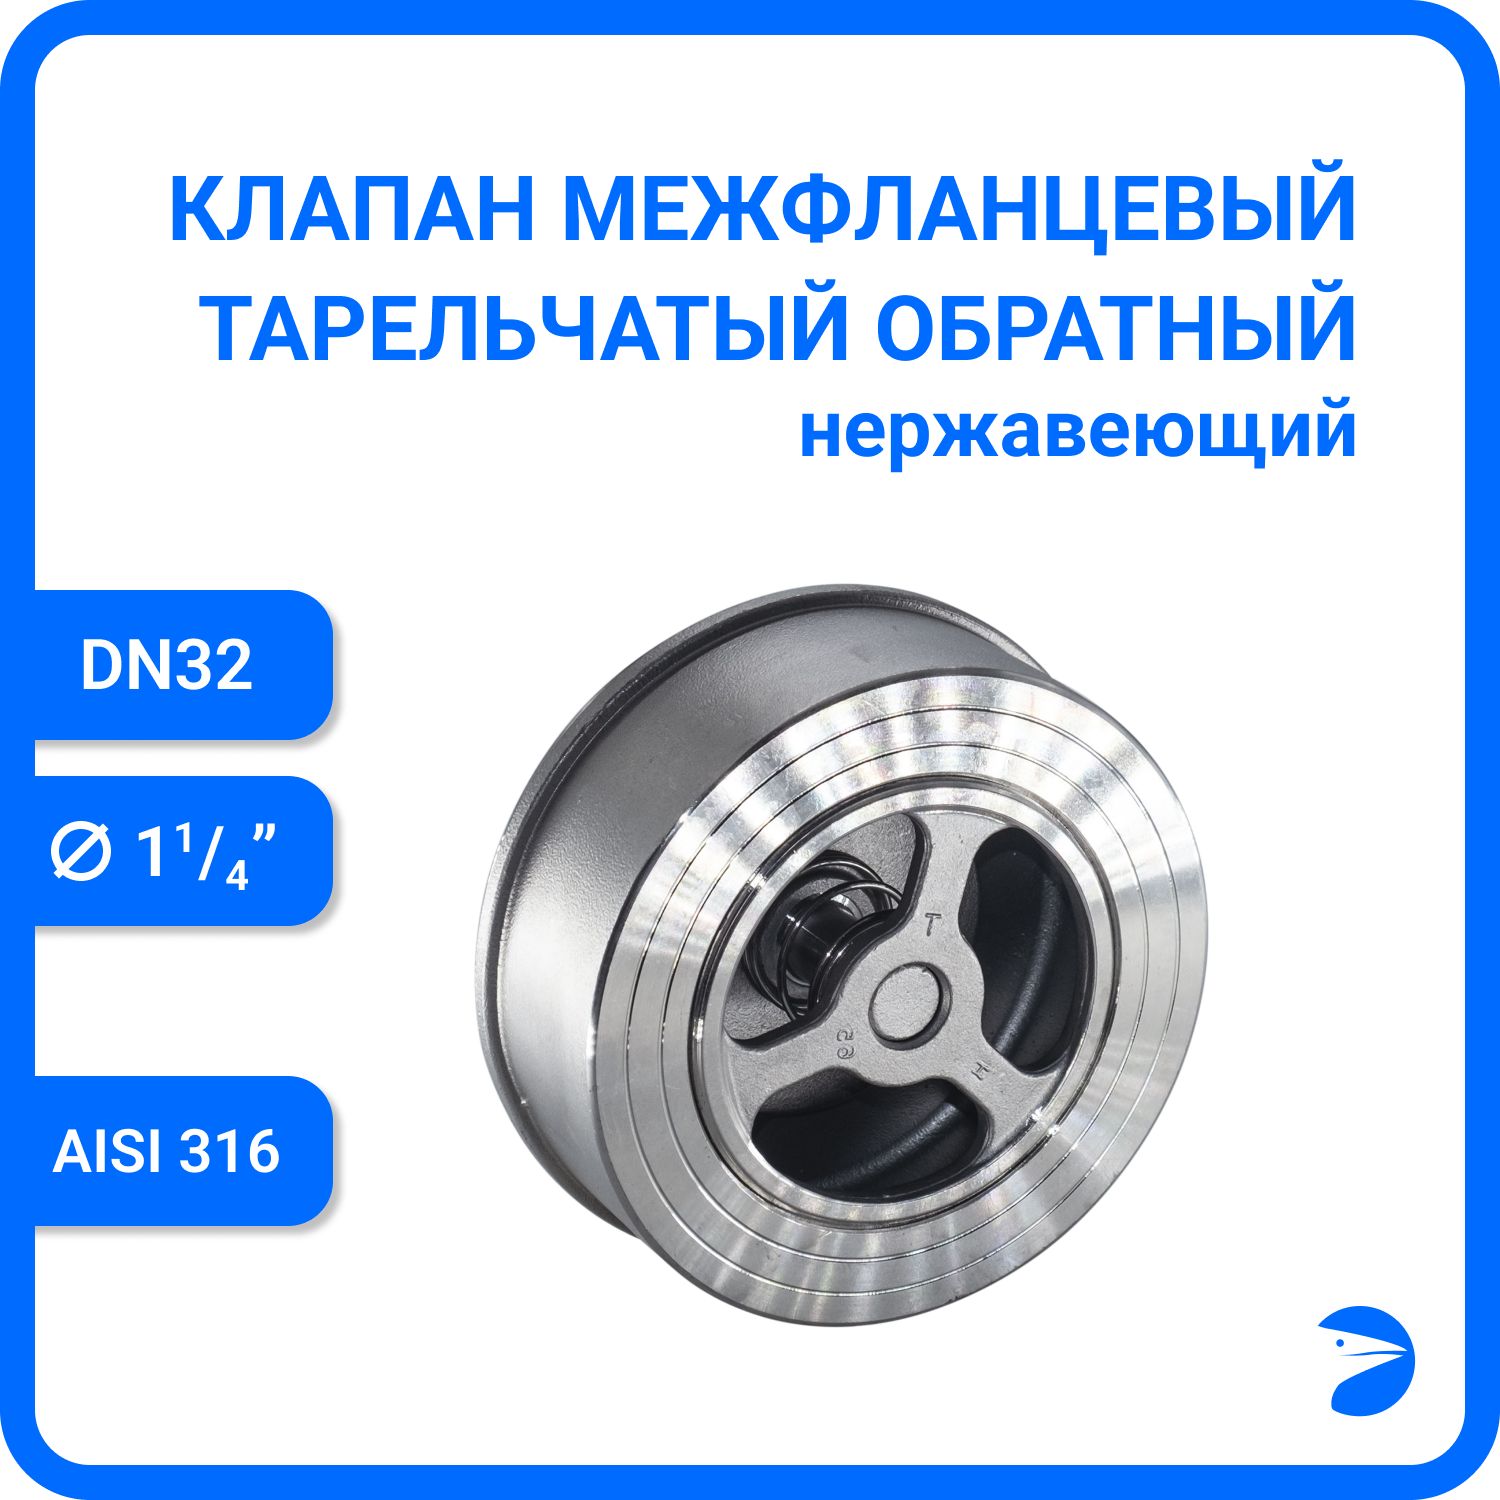 Обратный клапан Newkey нержавеющий, AISI316 DN32 (1_1/4